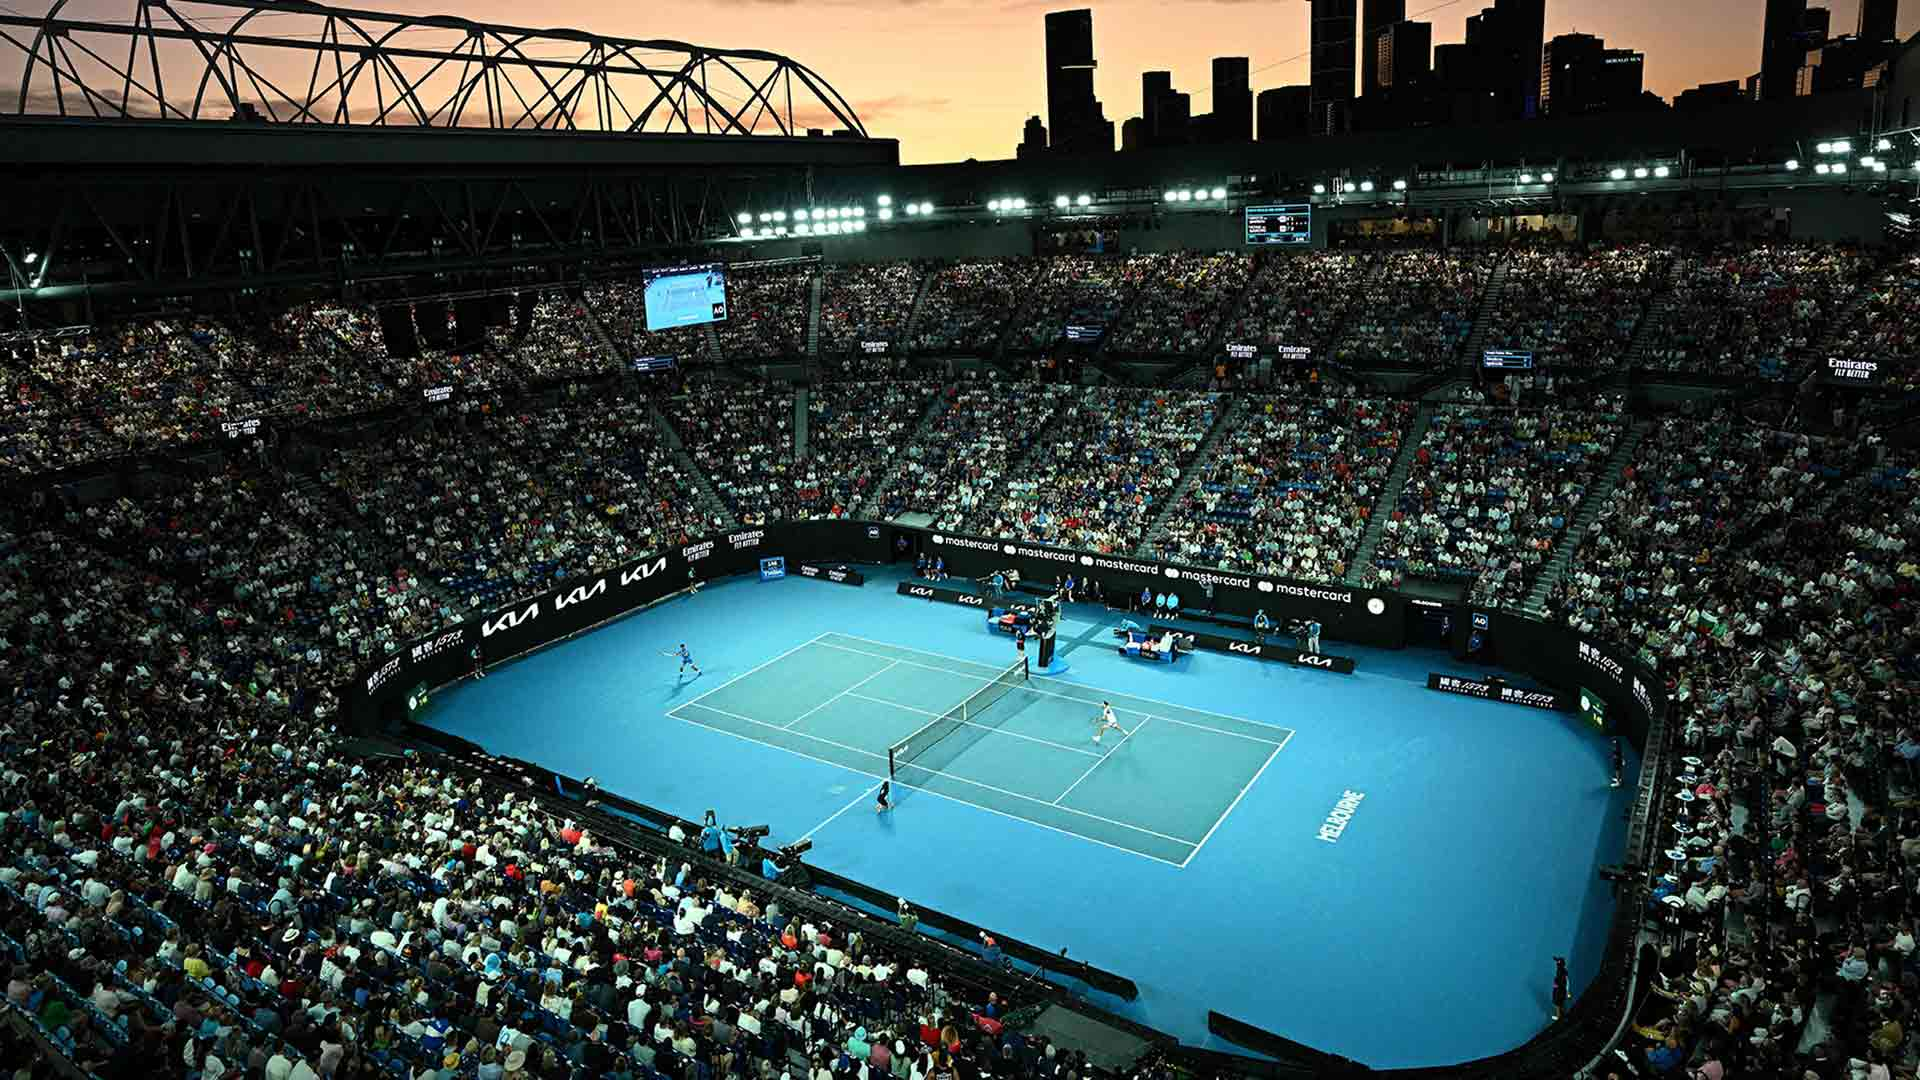 The Australian Open